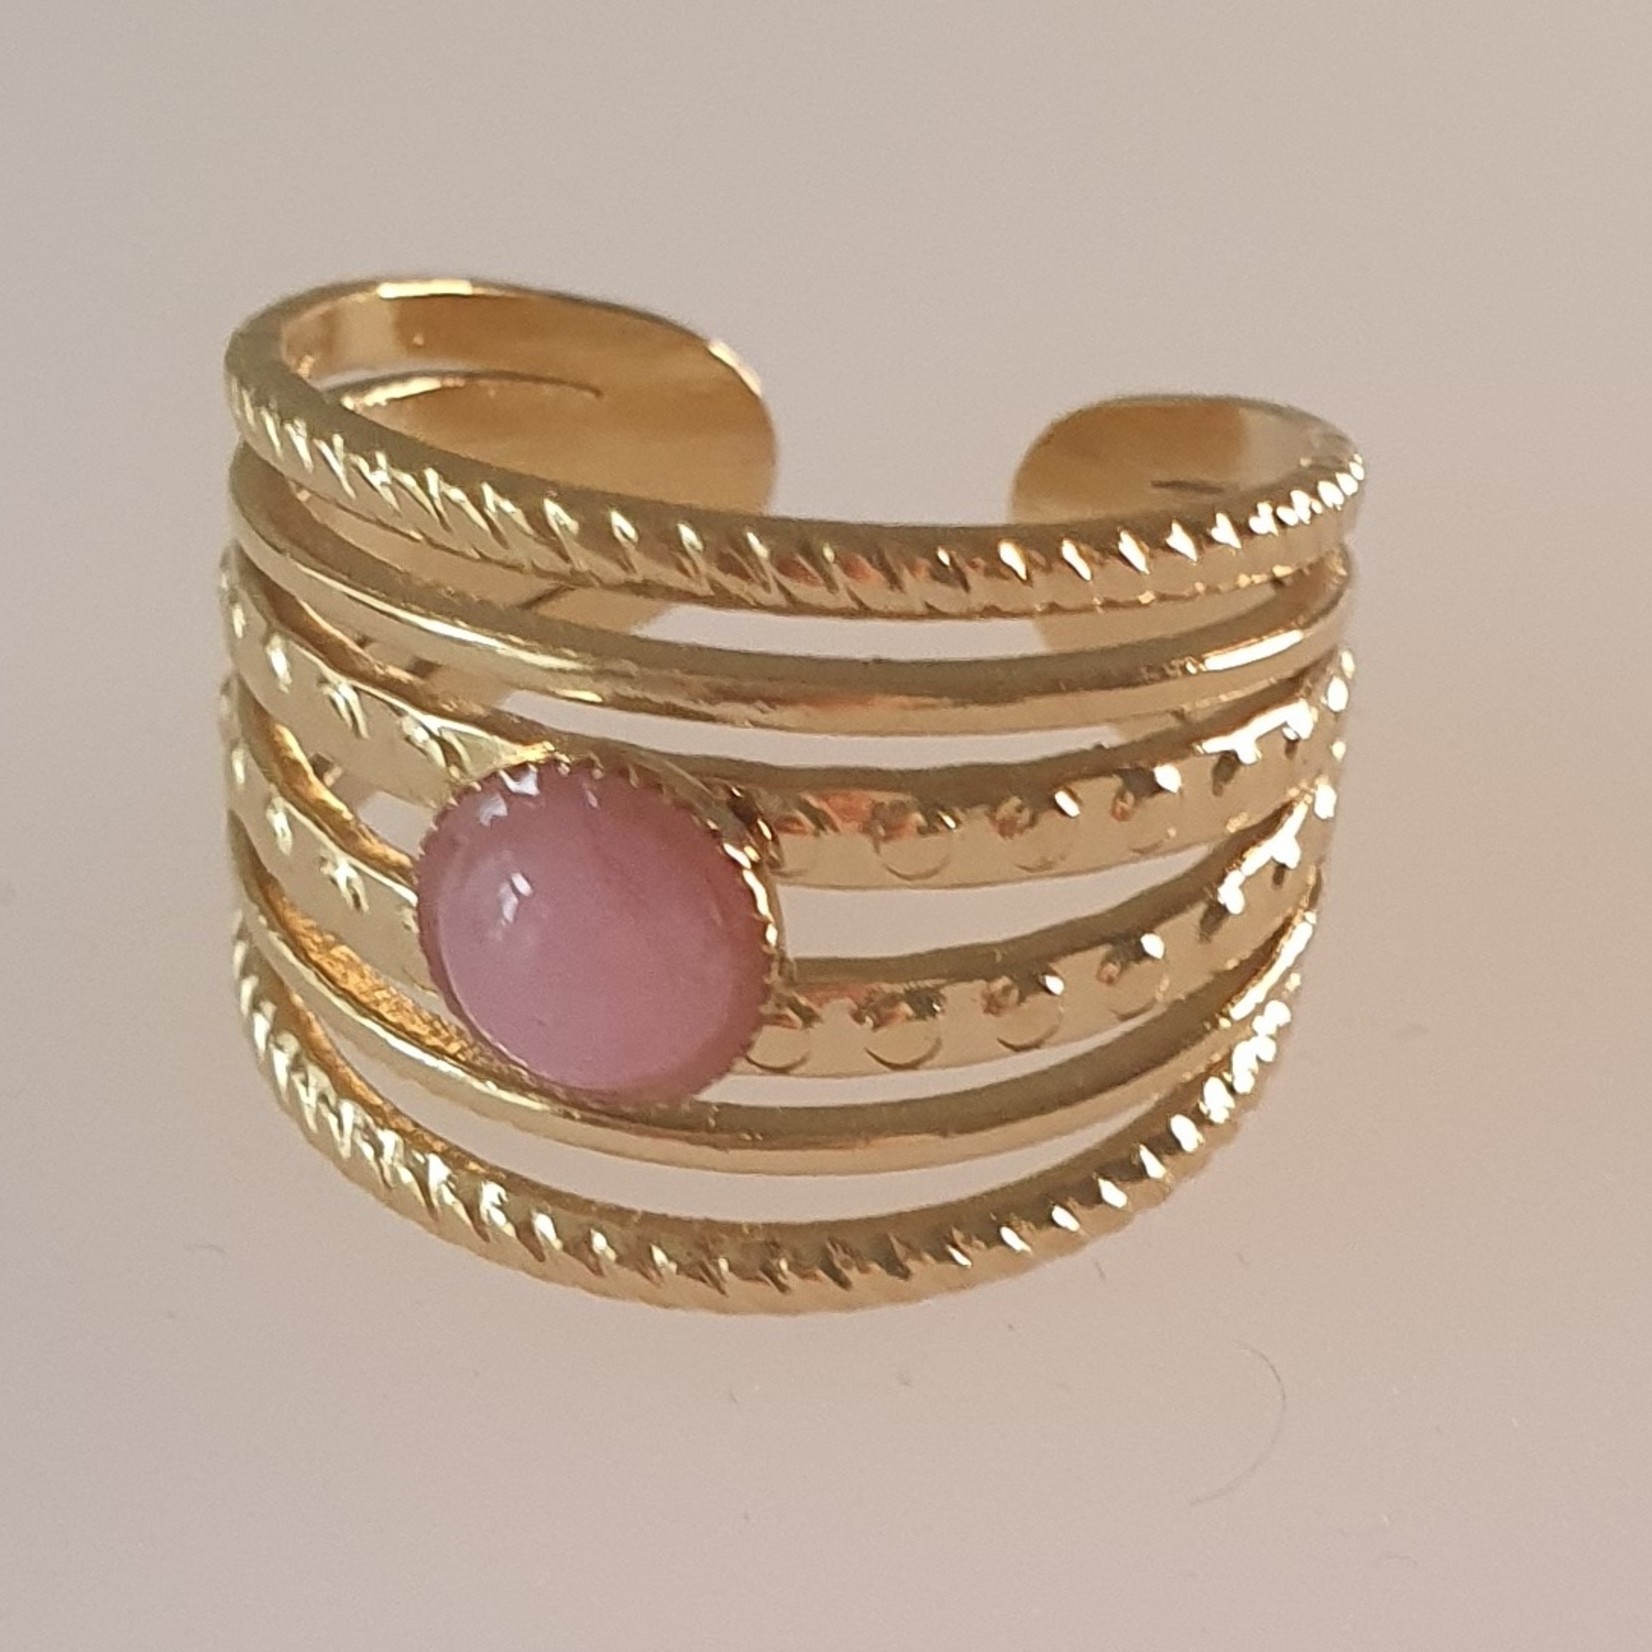 Eve's Gifts Boho-Ring aus vergoldetem Edelstahl mit hellrosa Stein